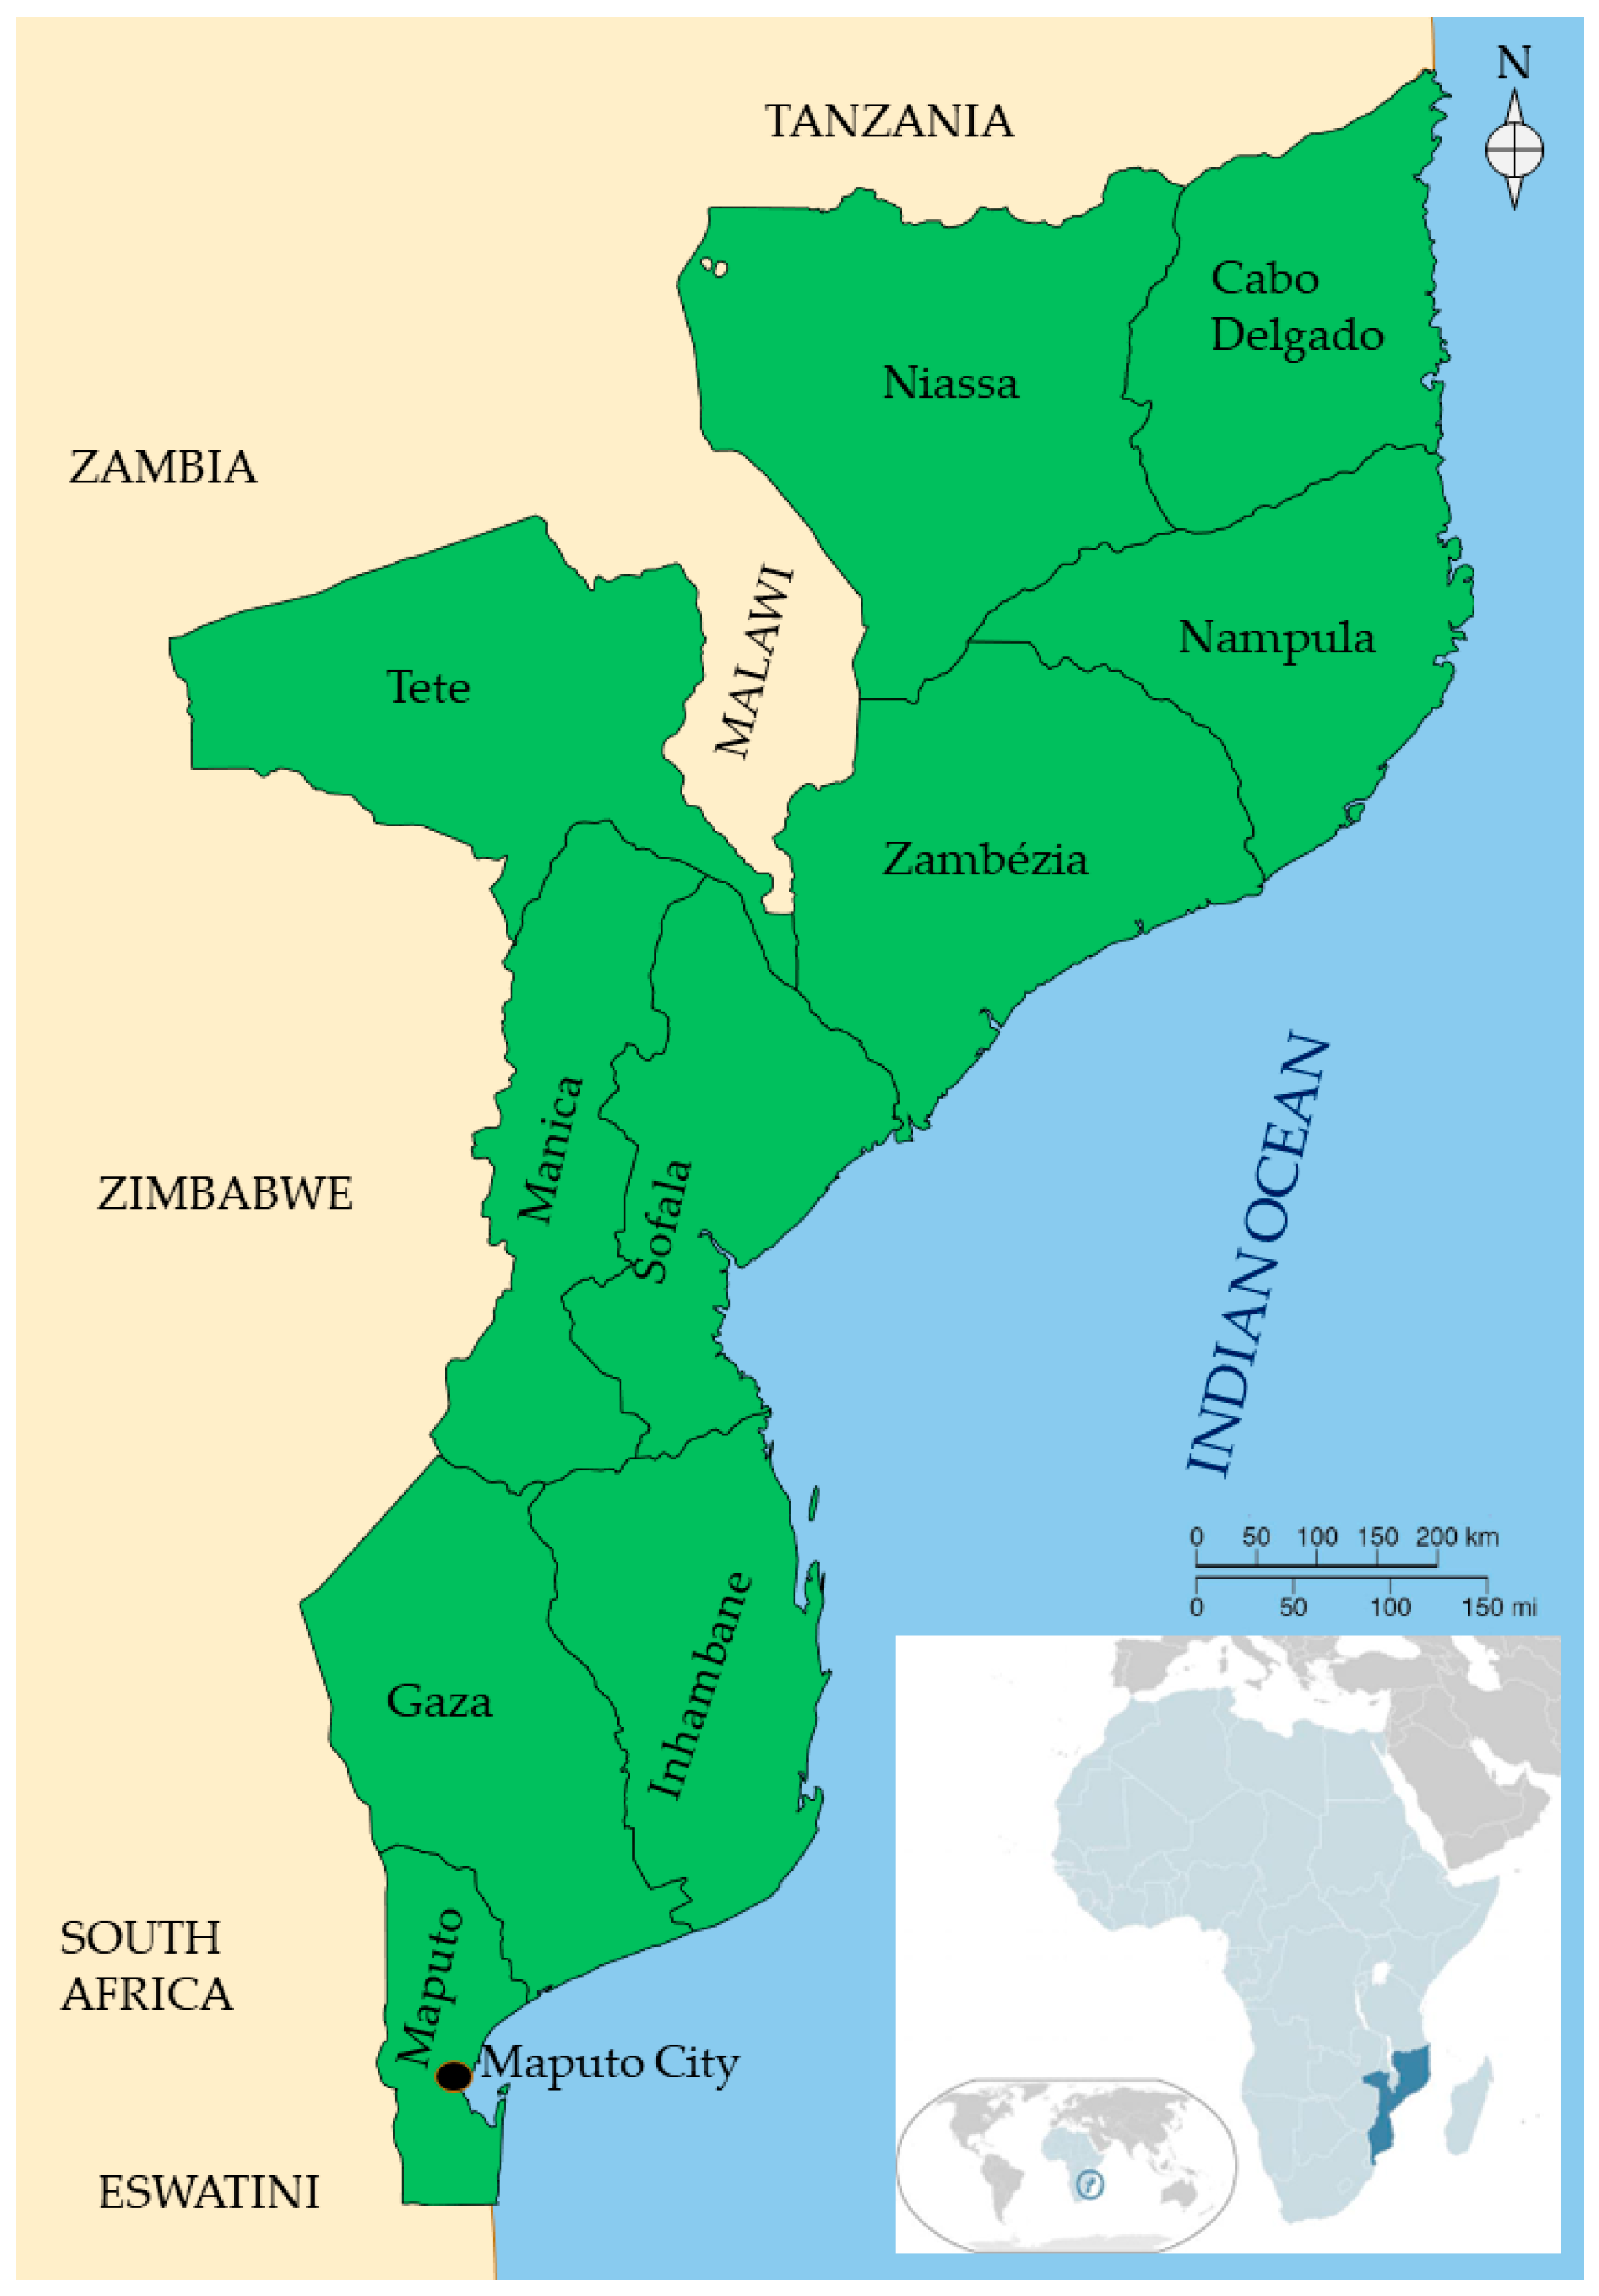 Mozambique: Country Profile